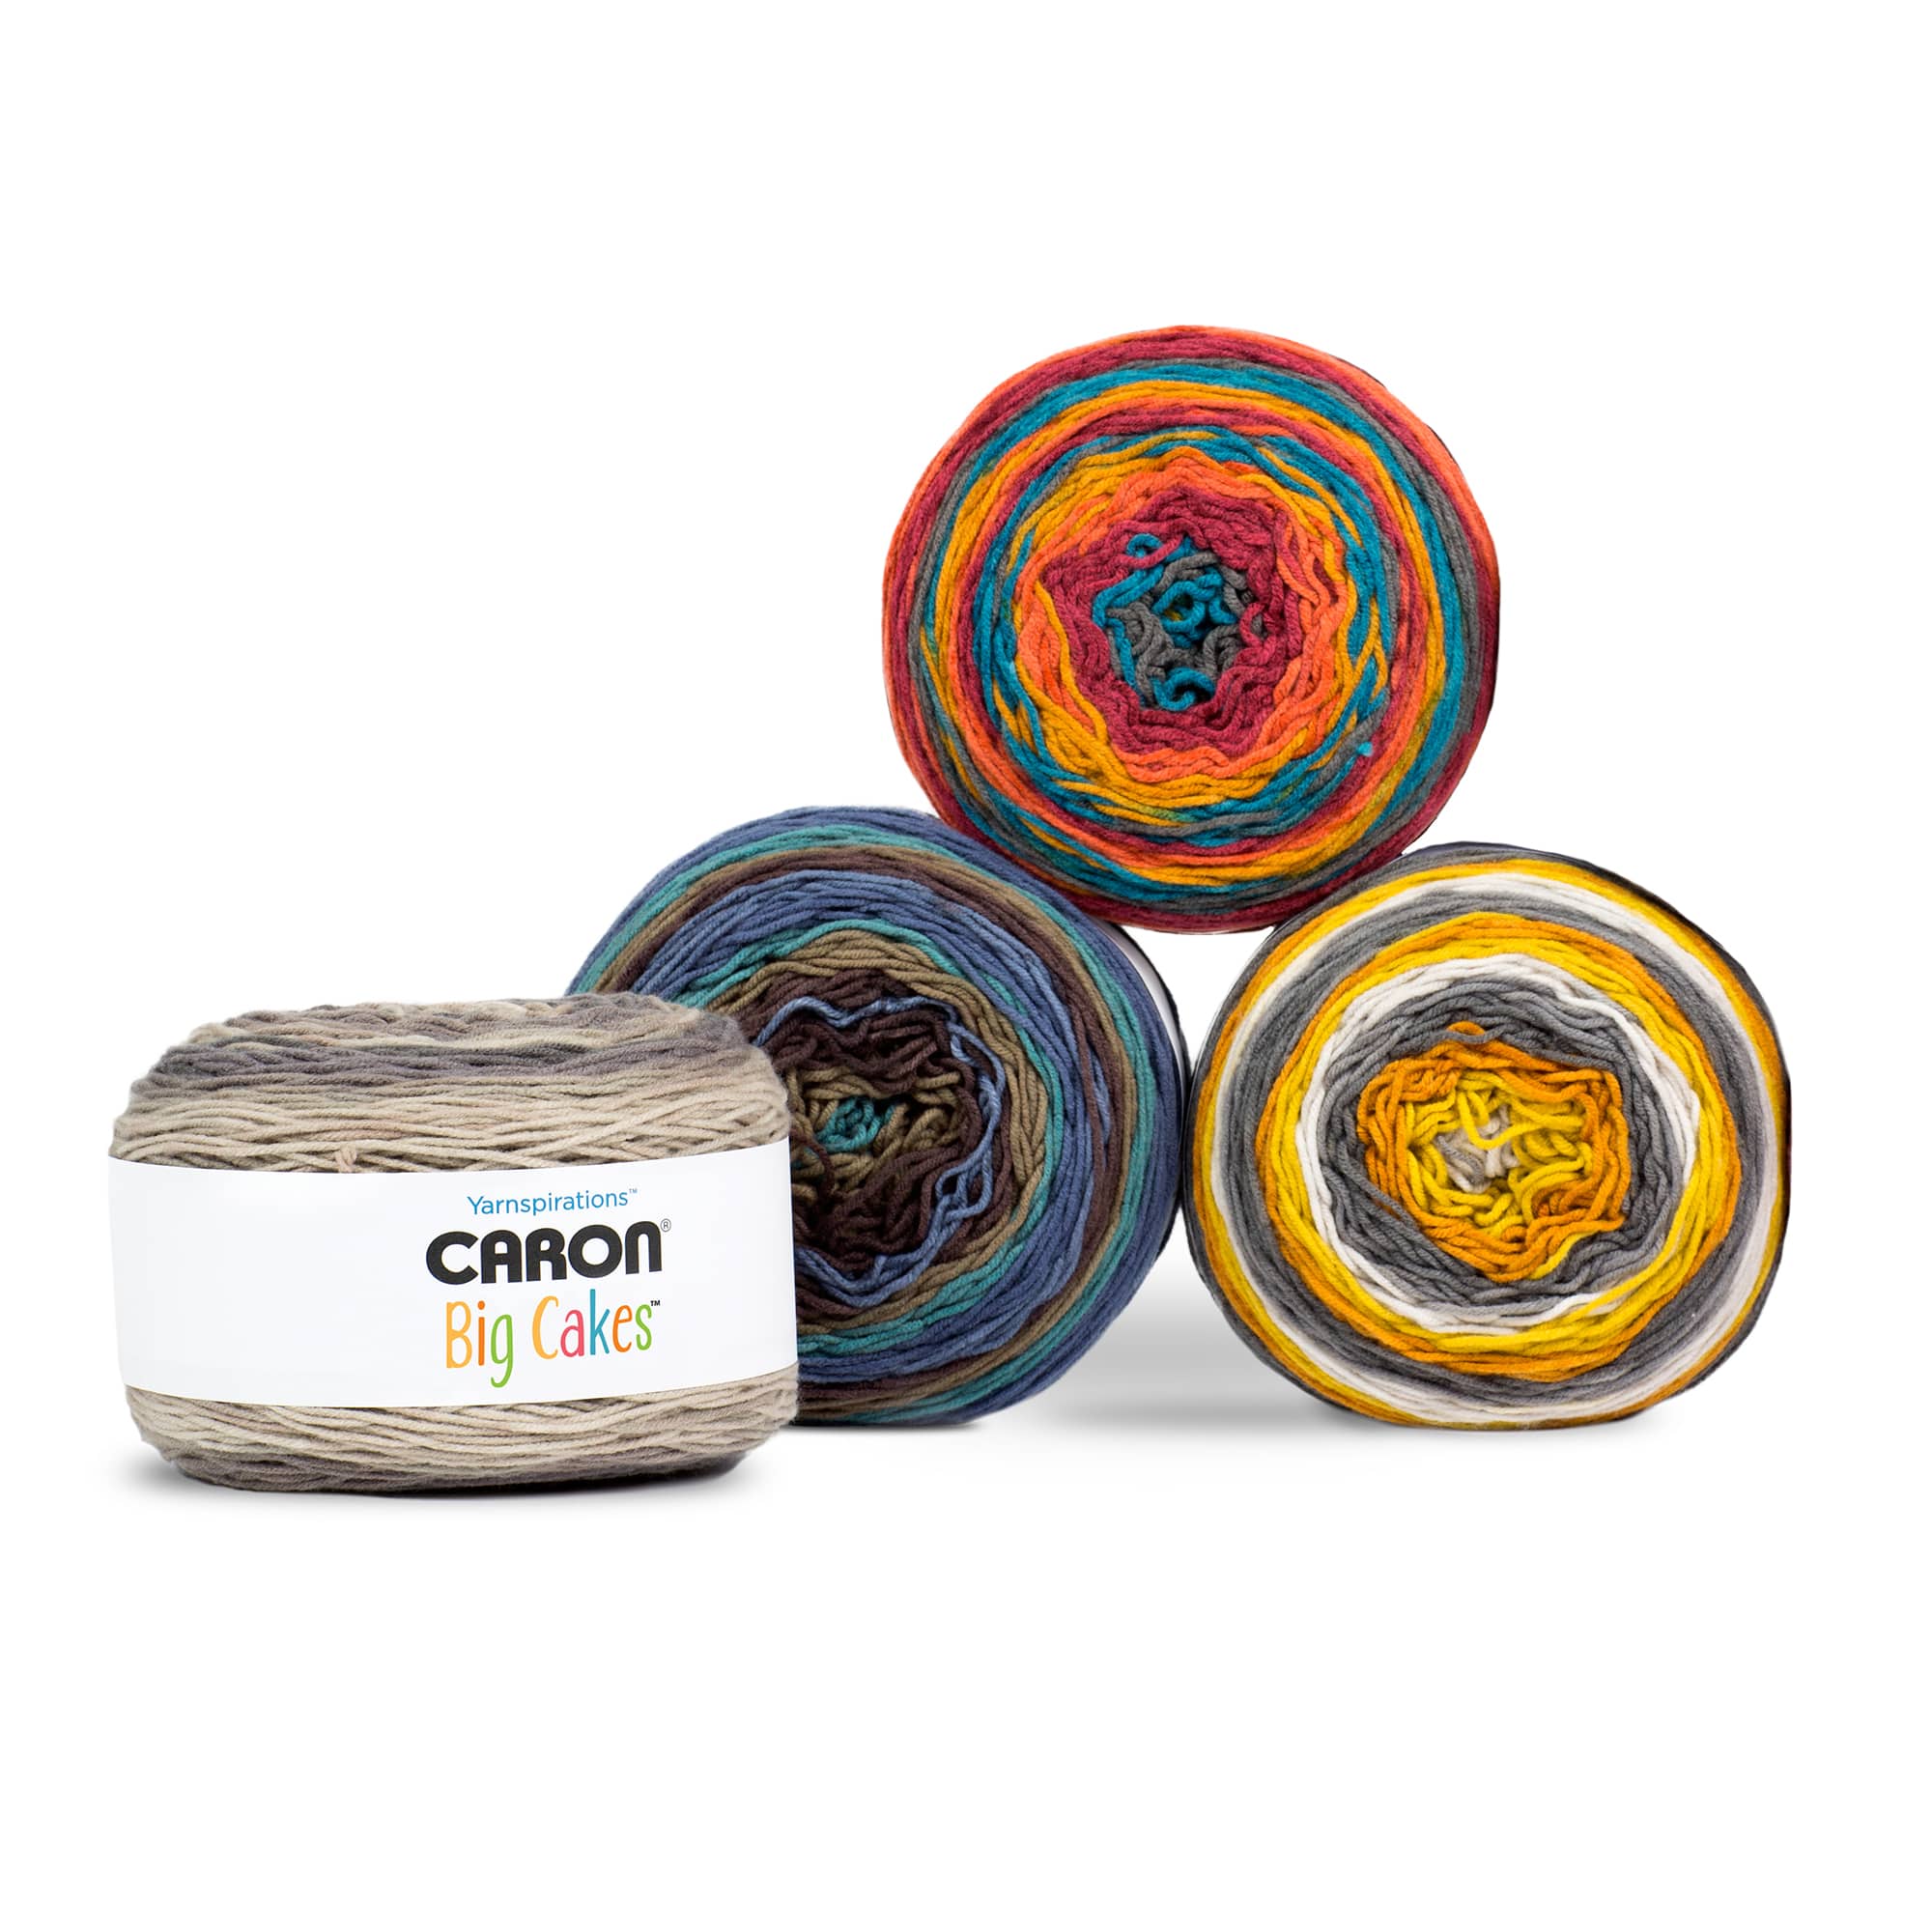  Caron Big Cakes Self Striping Yarn ~ 603 yd/551 m / 10.5oz/300  g Each (Cookie Crumble)